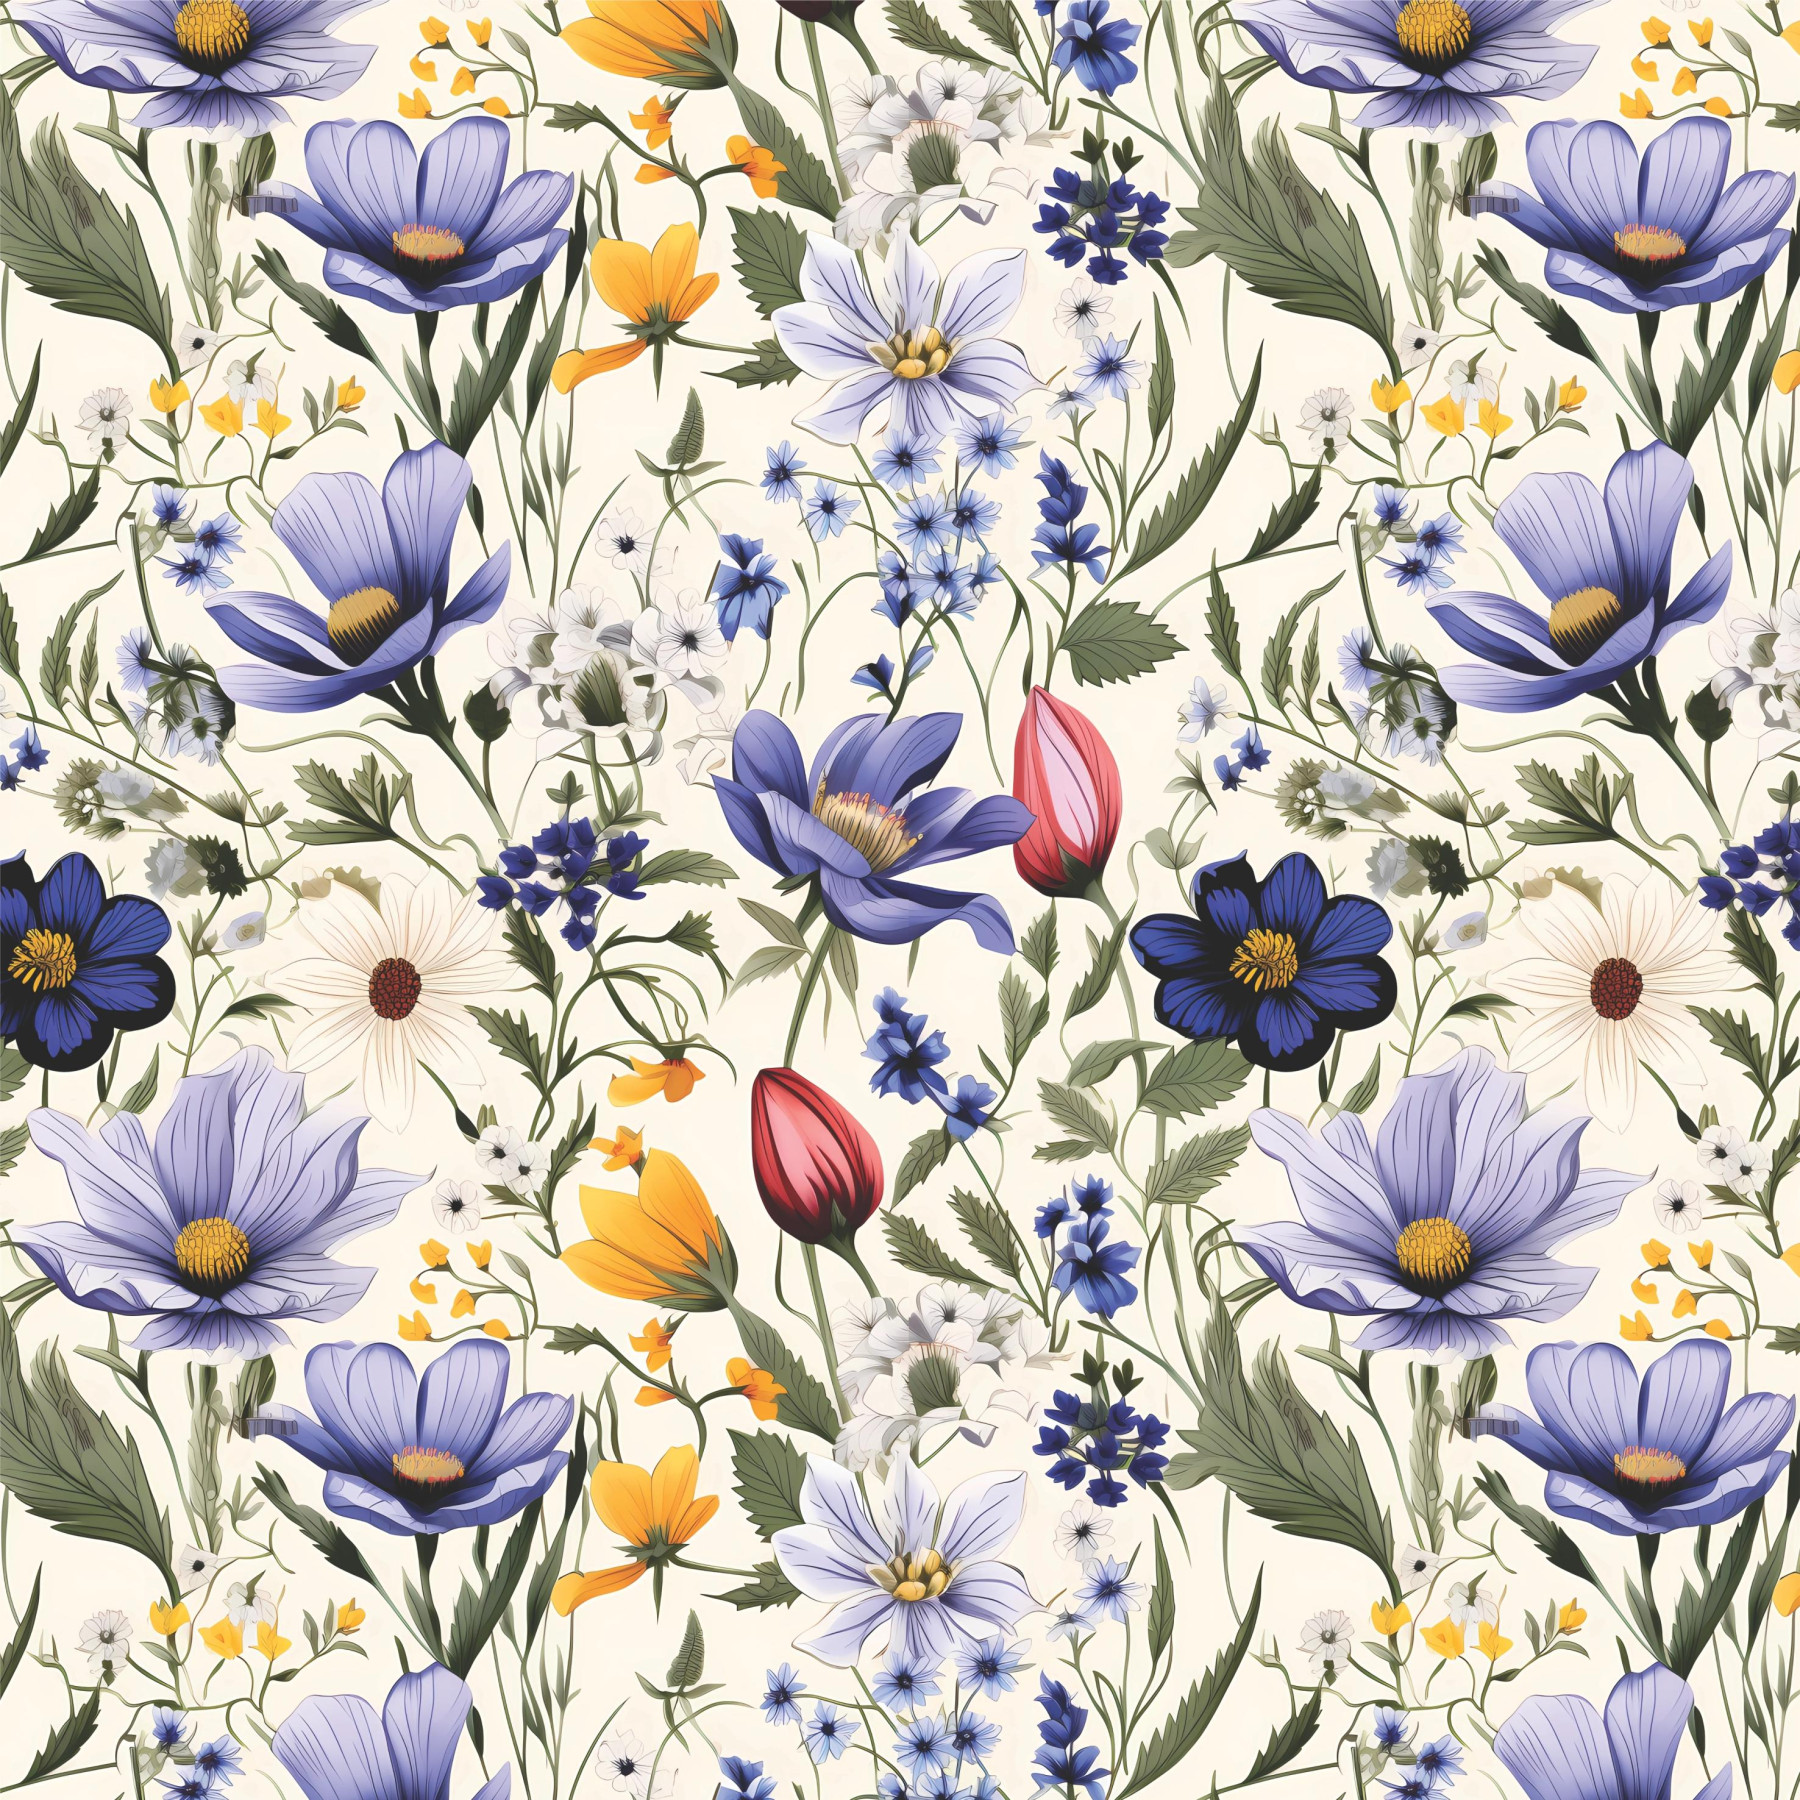 FLOWERS wz.4 - Cotton woven fabric